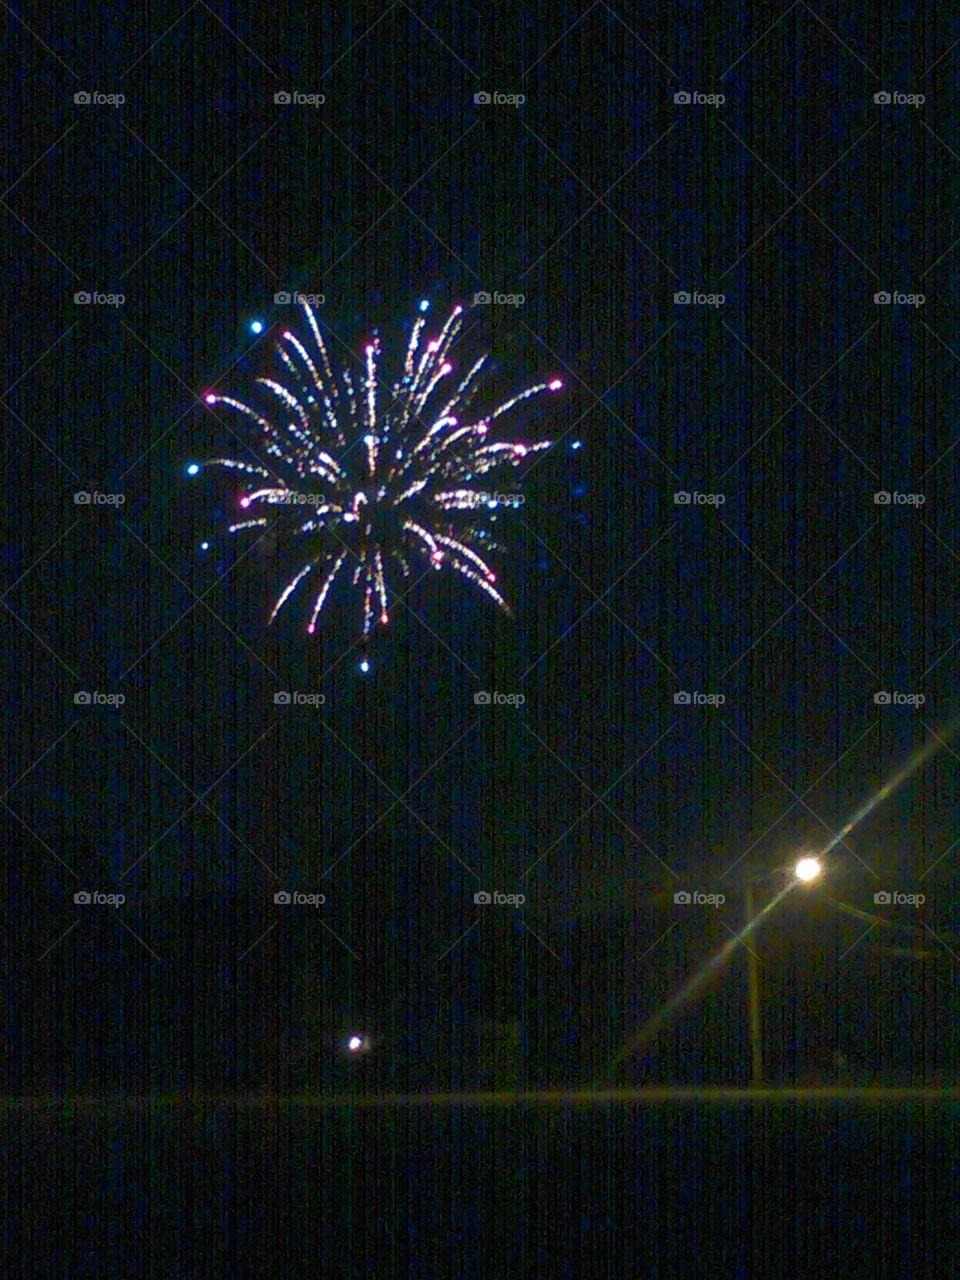 4th of july fireworks. we seen fireworks people in neighborhood were shooting off.